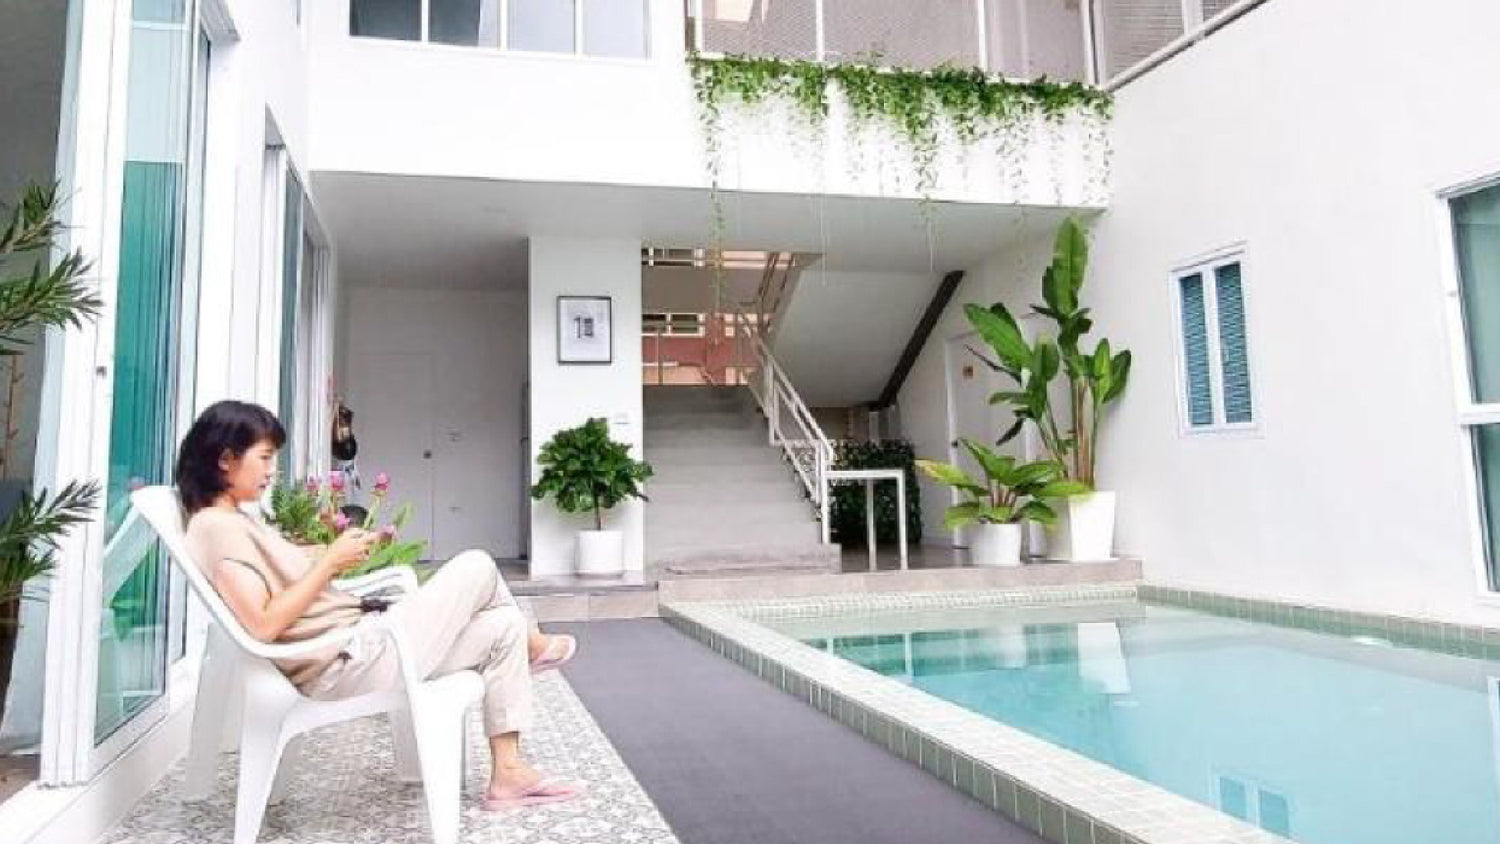 The Inn10 Pool Villa Pattaya